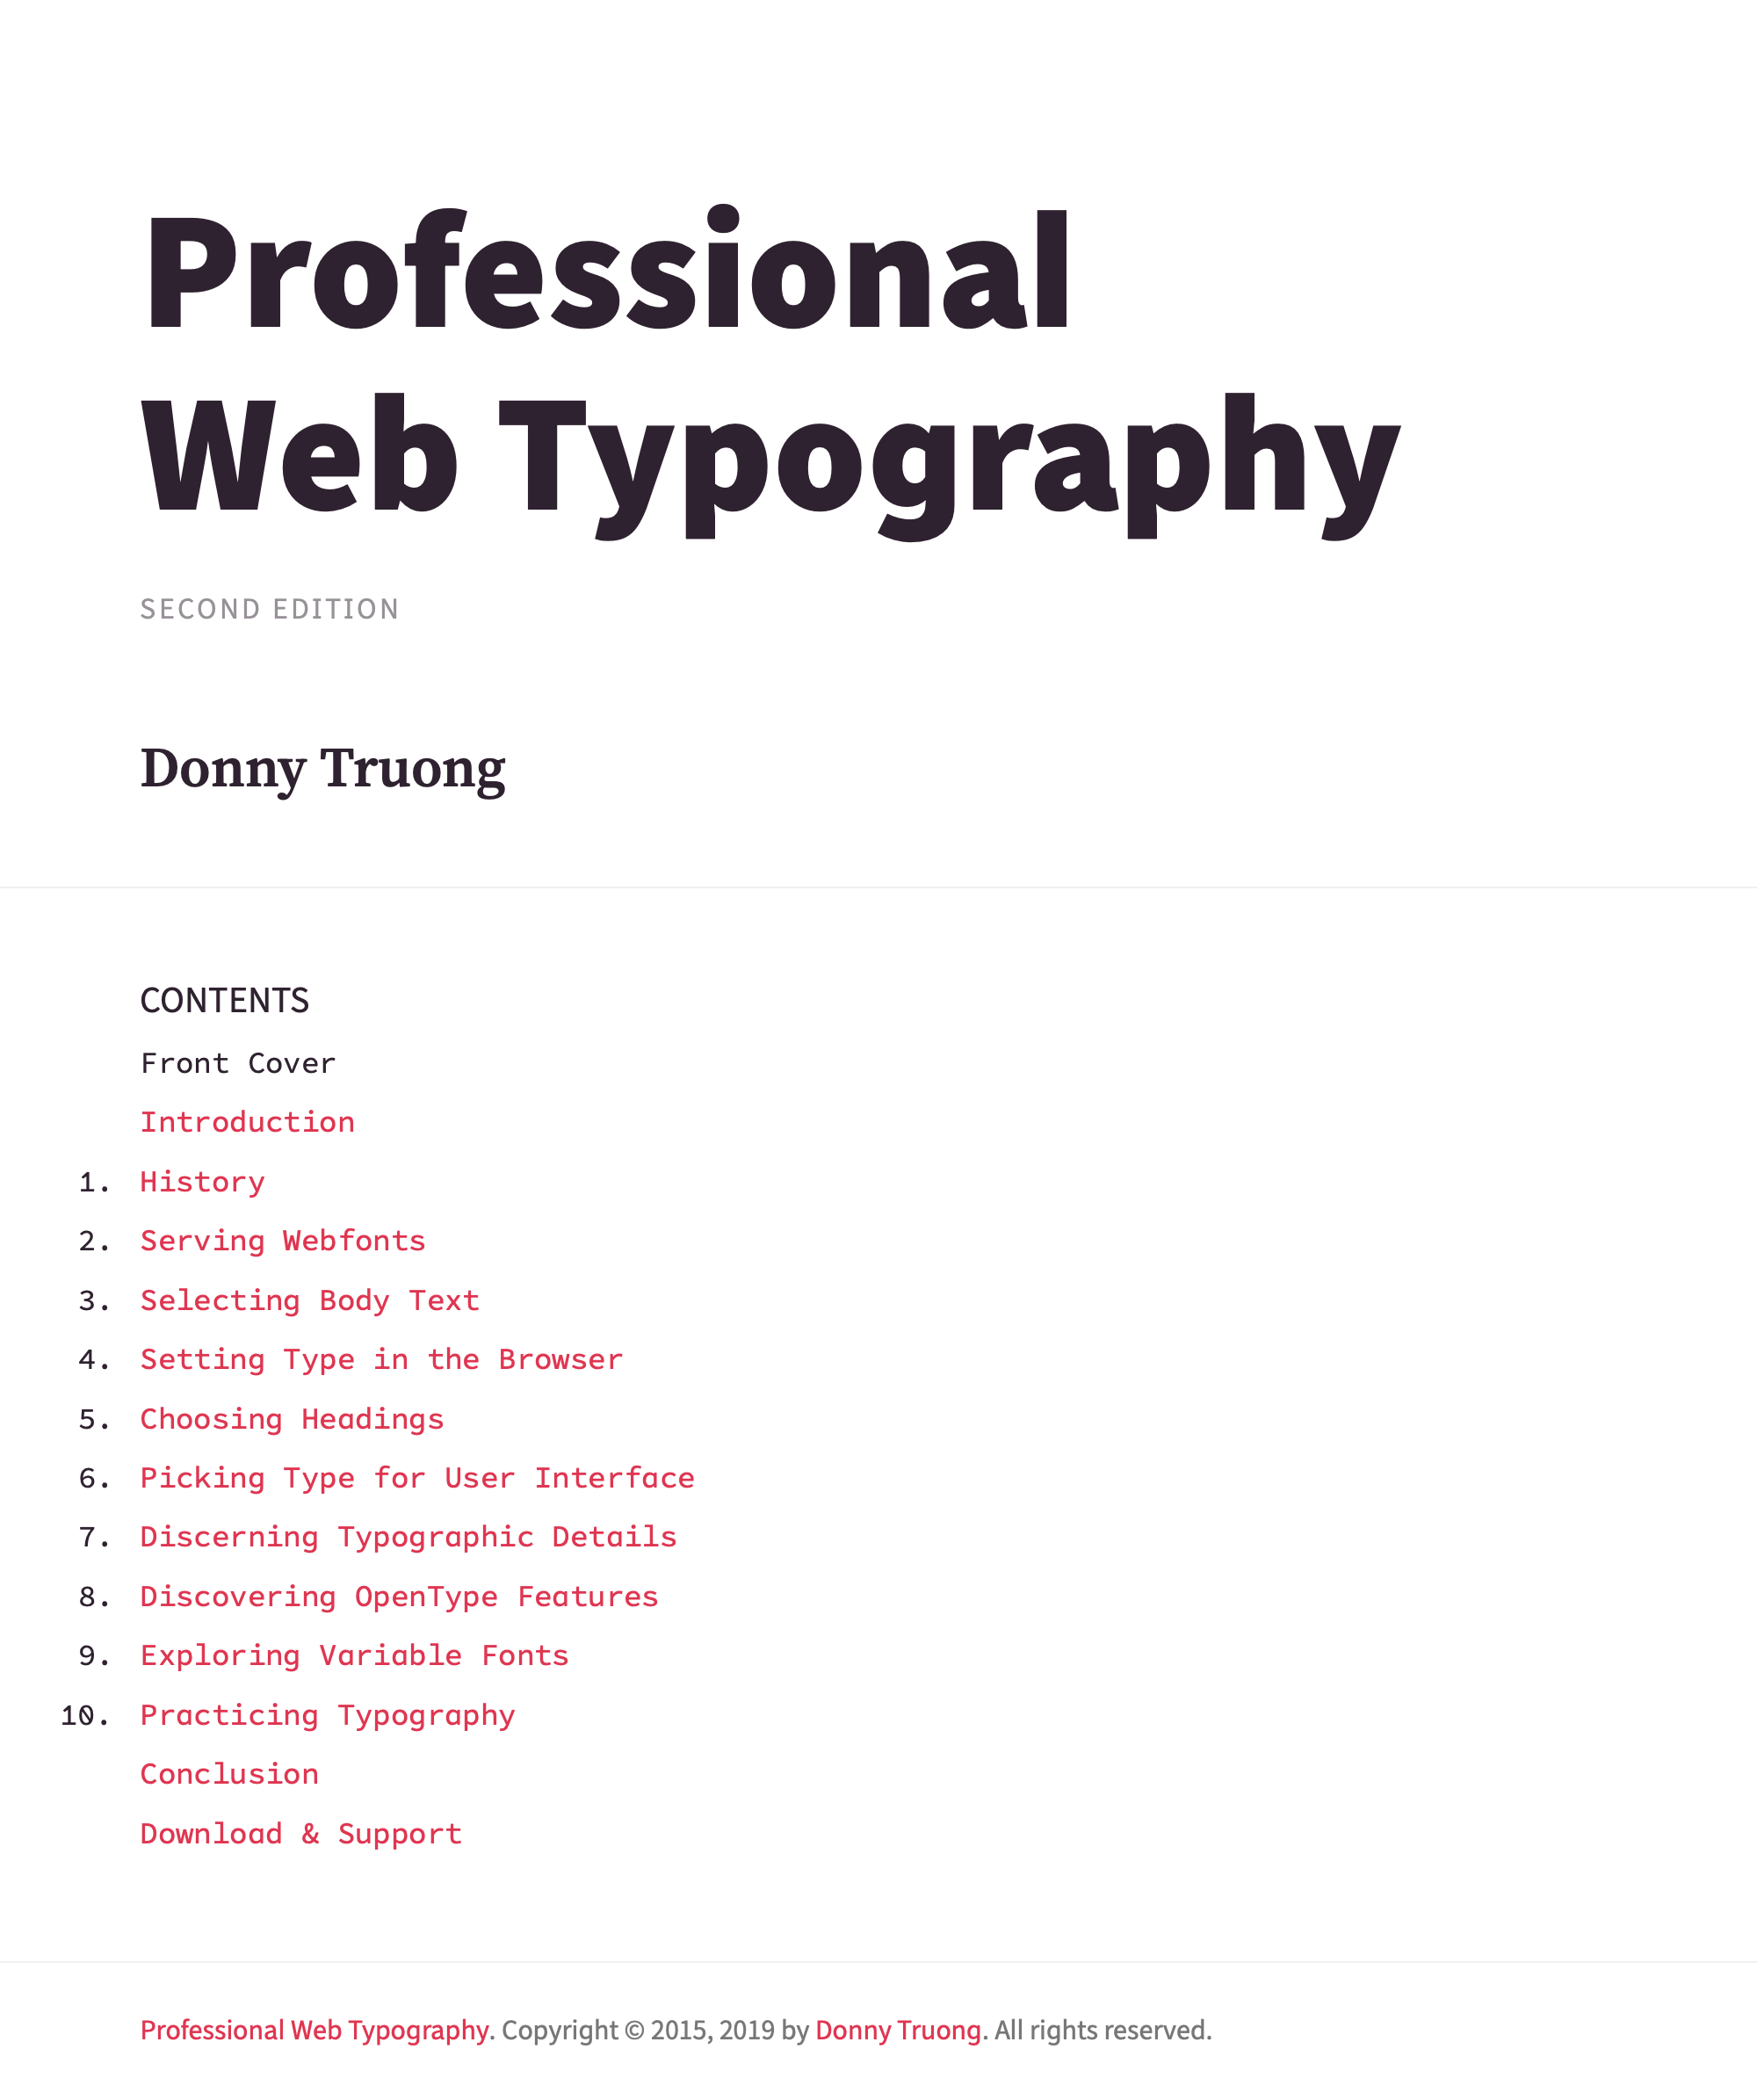 Professional Web Typography